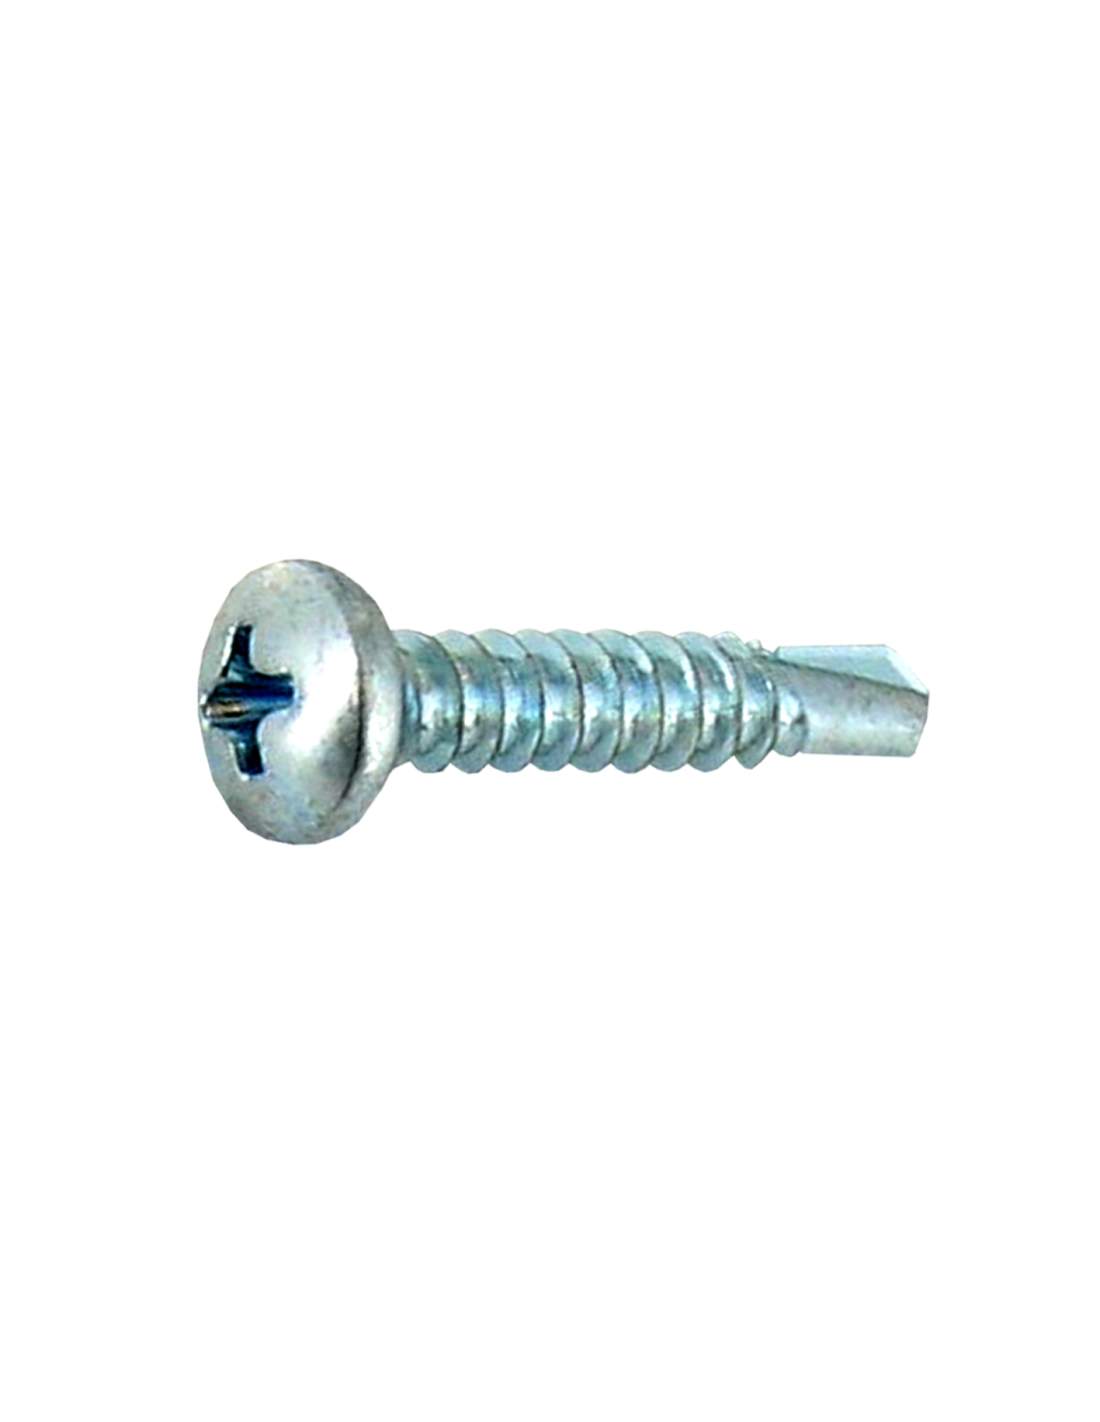 AZI 4.2x19 pan head self-drilling sheet metal screws, 17 pcs.